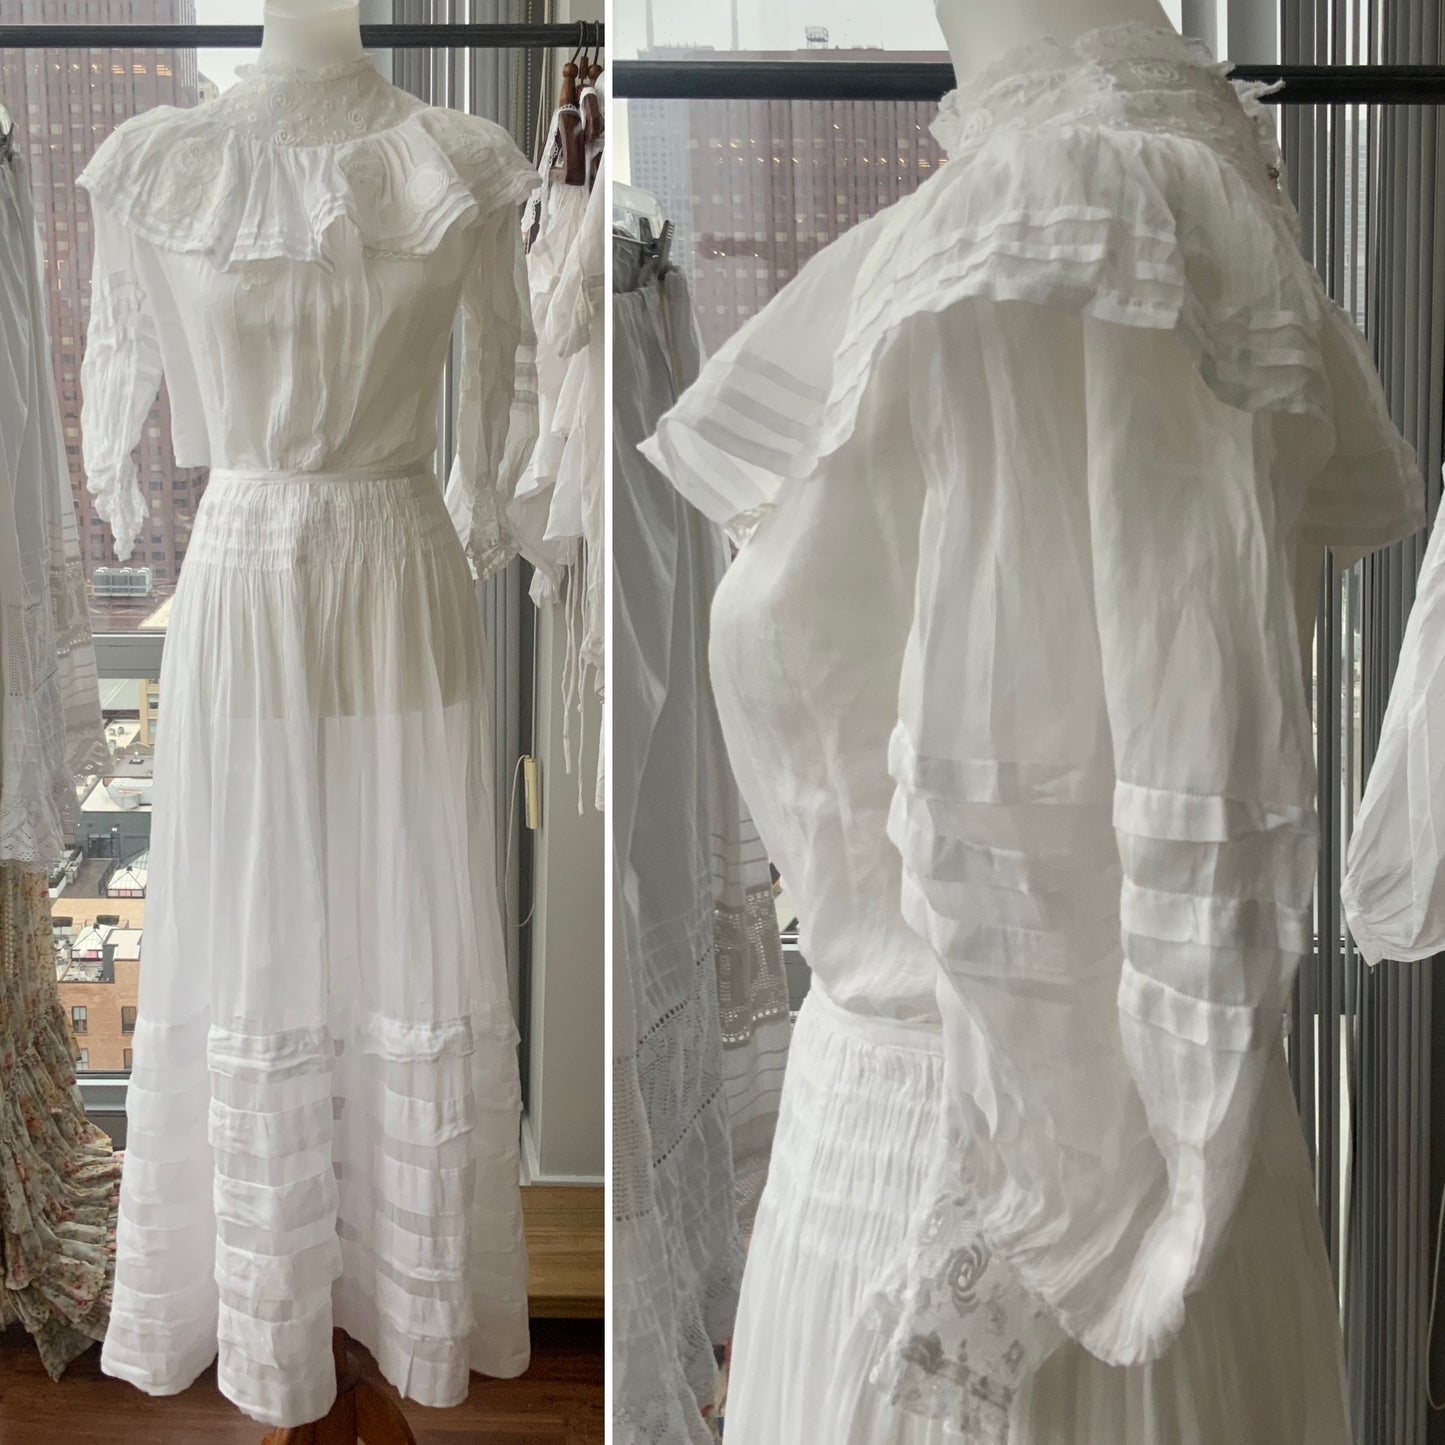 Edwardian Skirt and Blouse Prairie Set - 1900